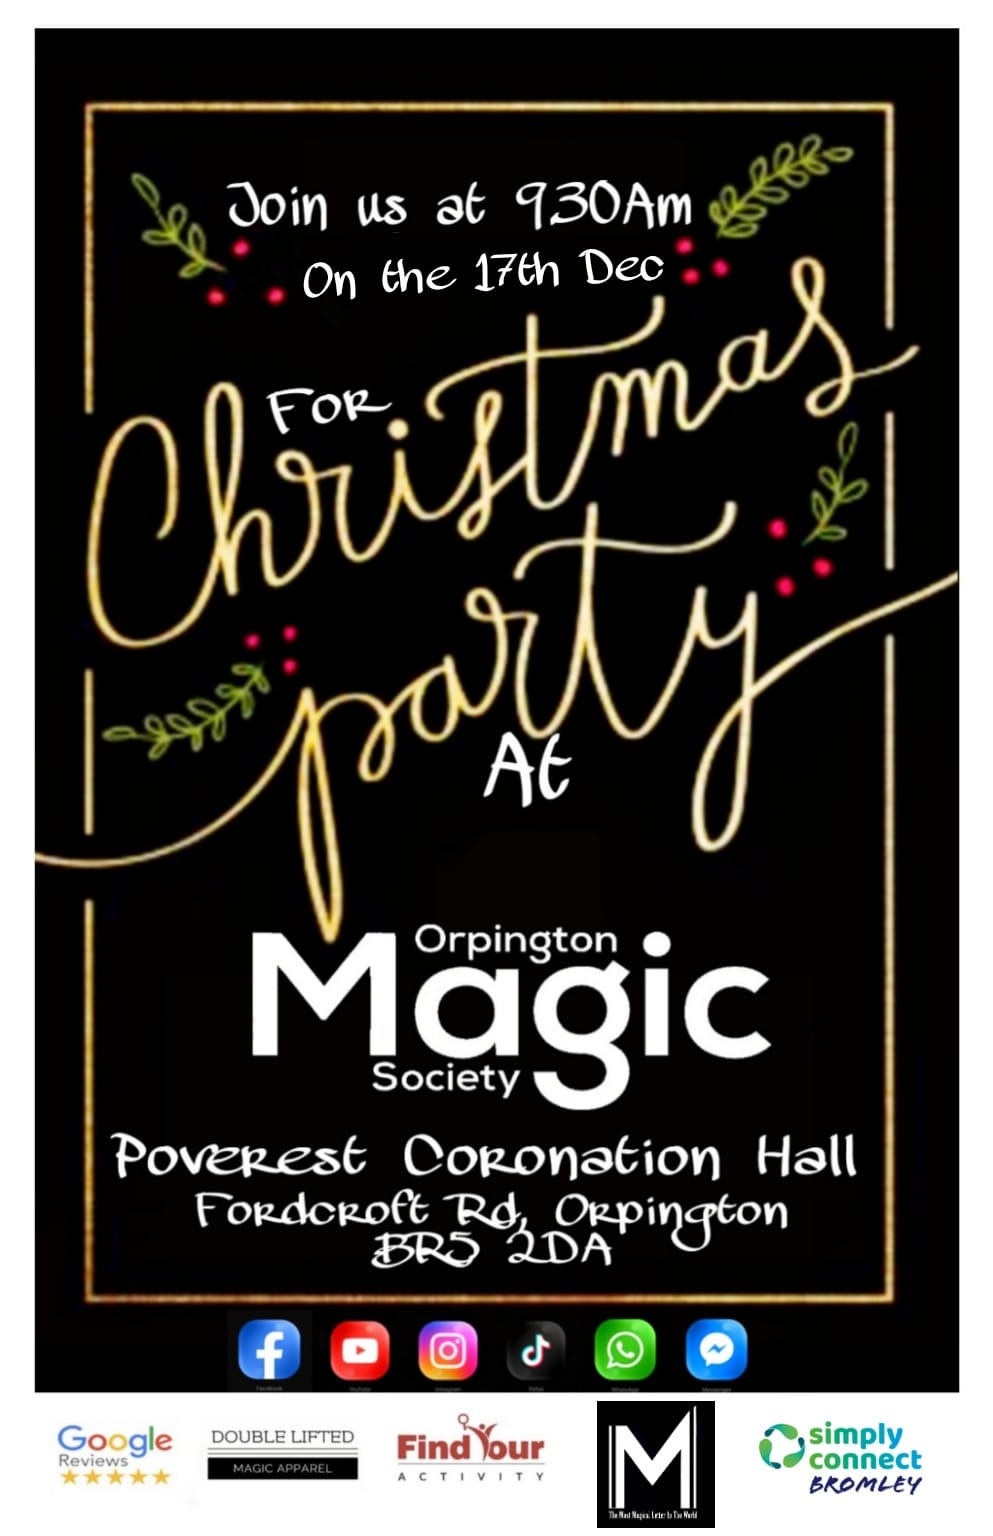 Orpington Magic Society Christmas Party event image